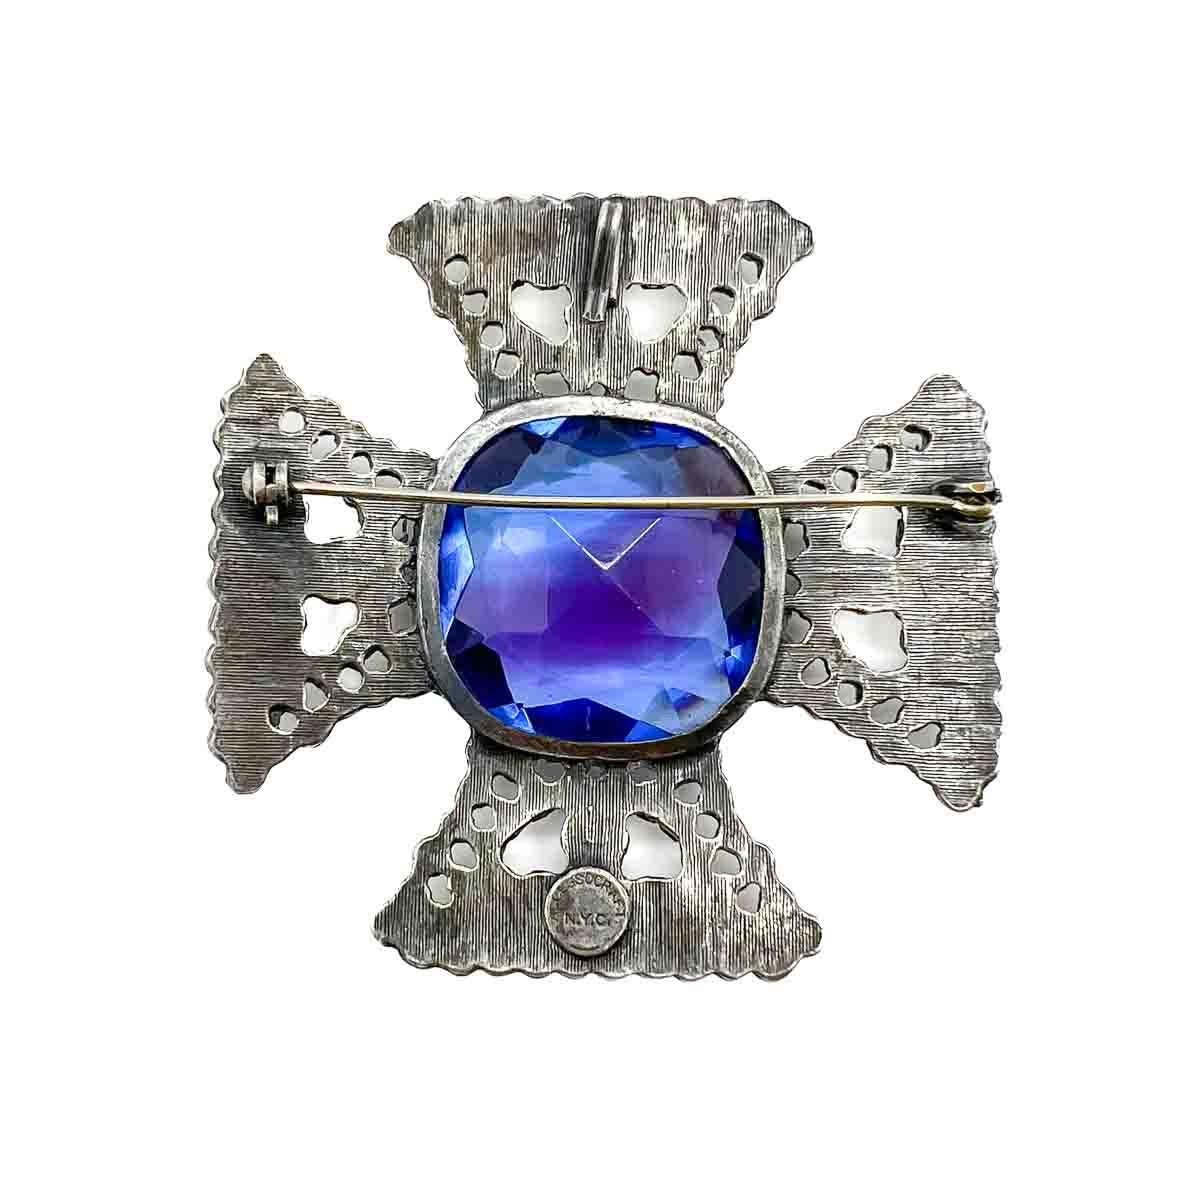  Accessocraft NYC Broche Cruciform Crystal des années 1980 Pour femmes 